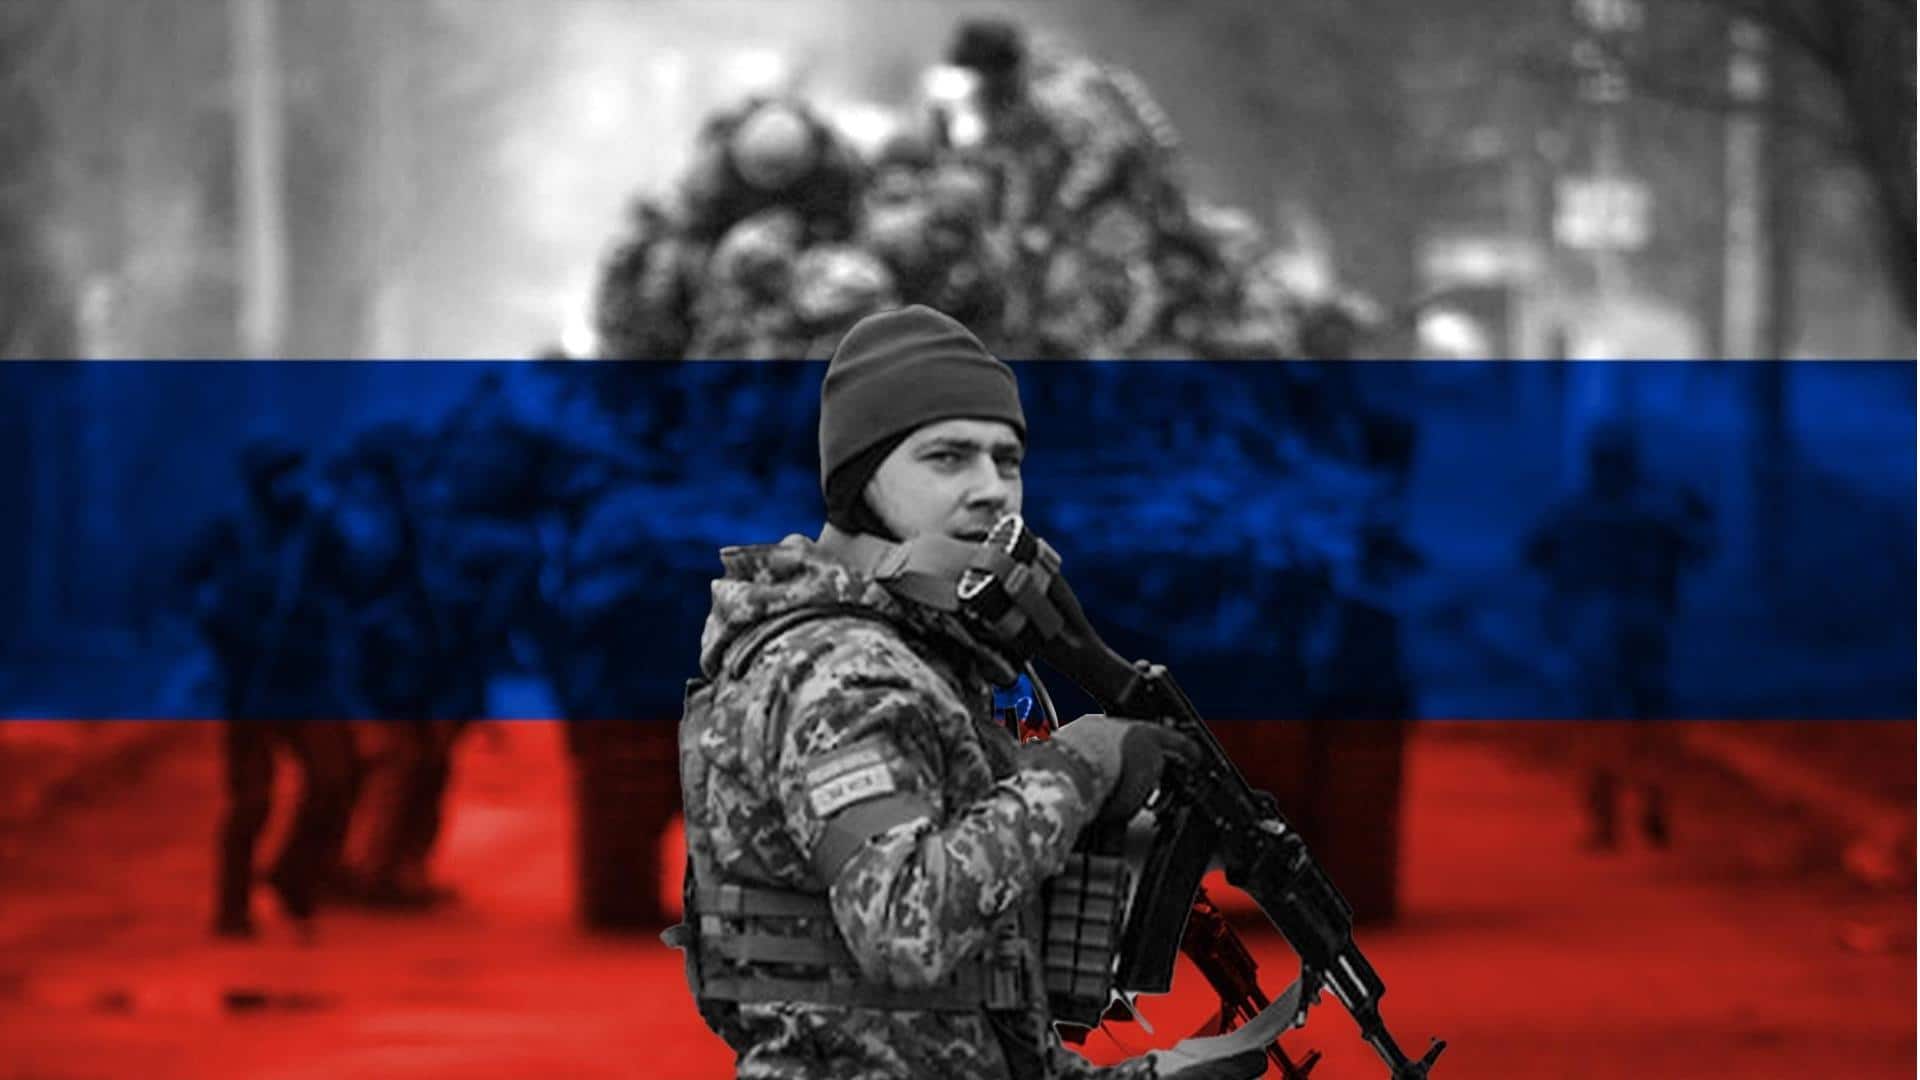 Russia claims Ukrainian city of Bakhmut captured, Kyiv denies